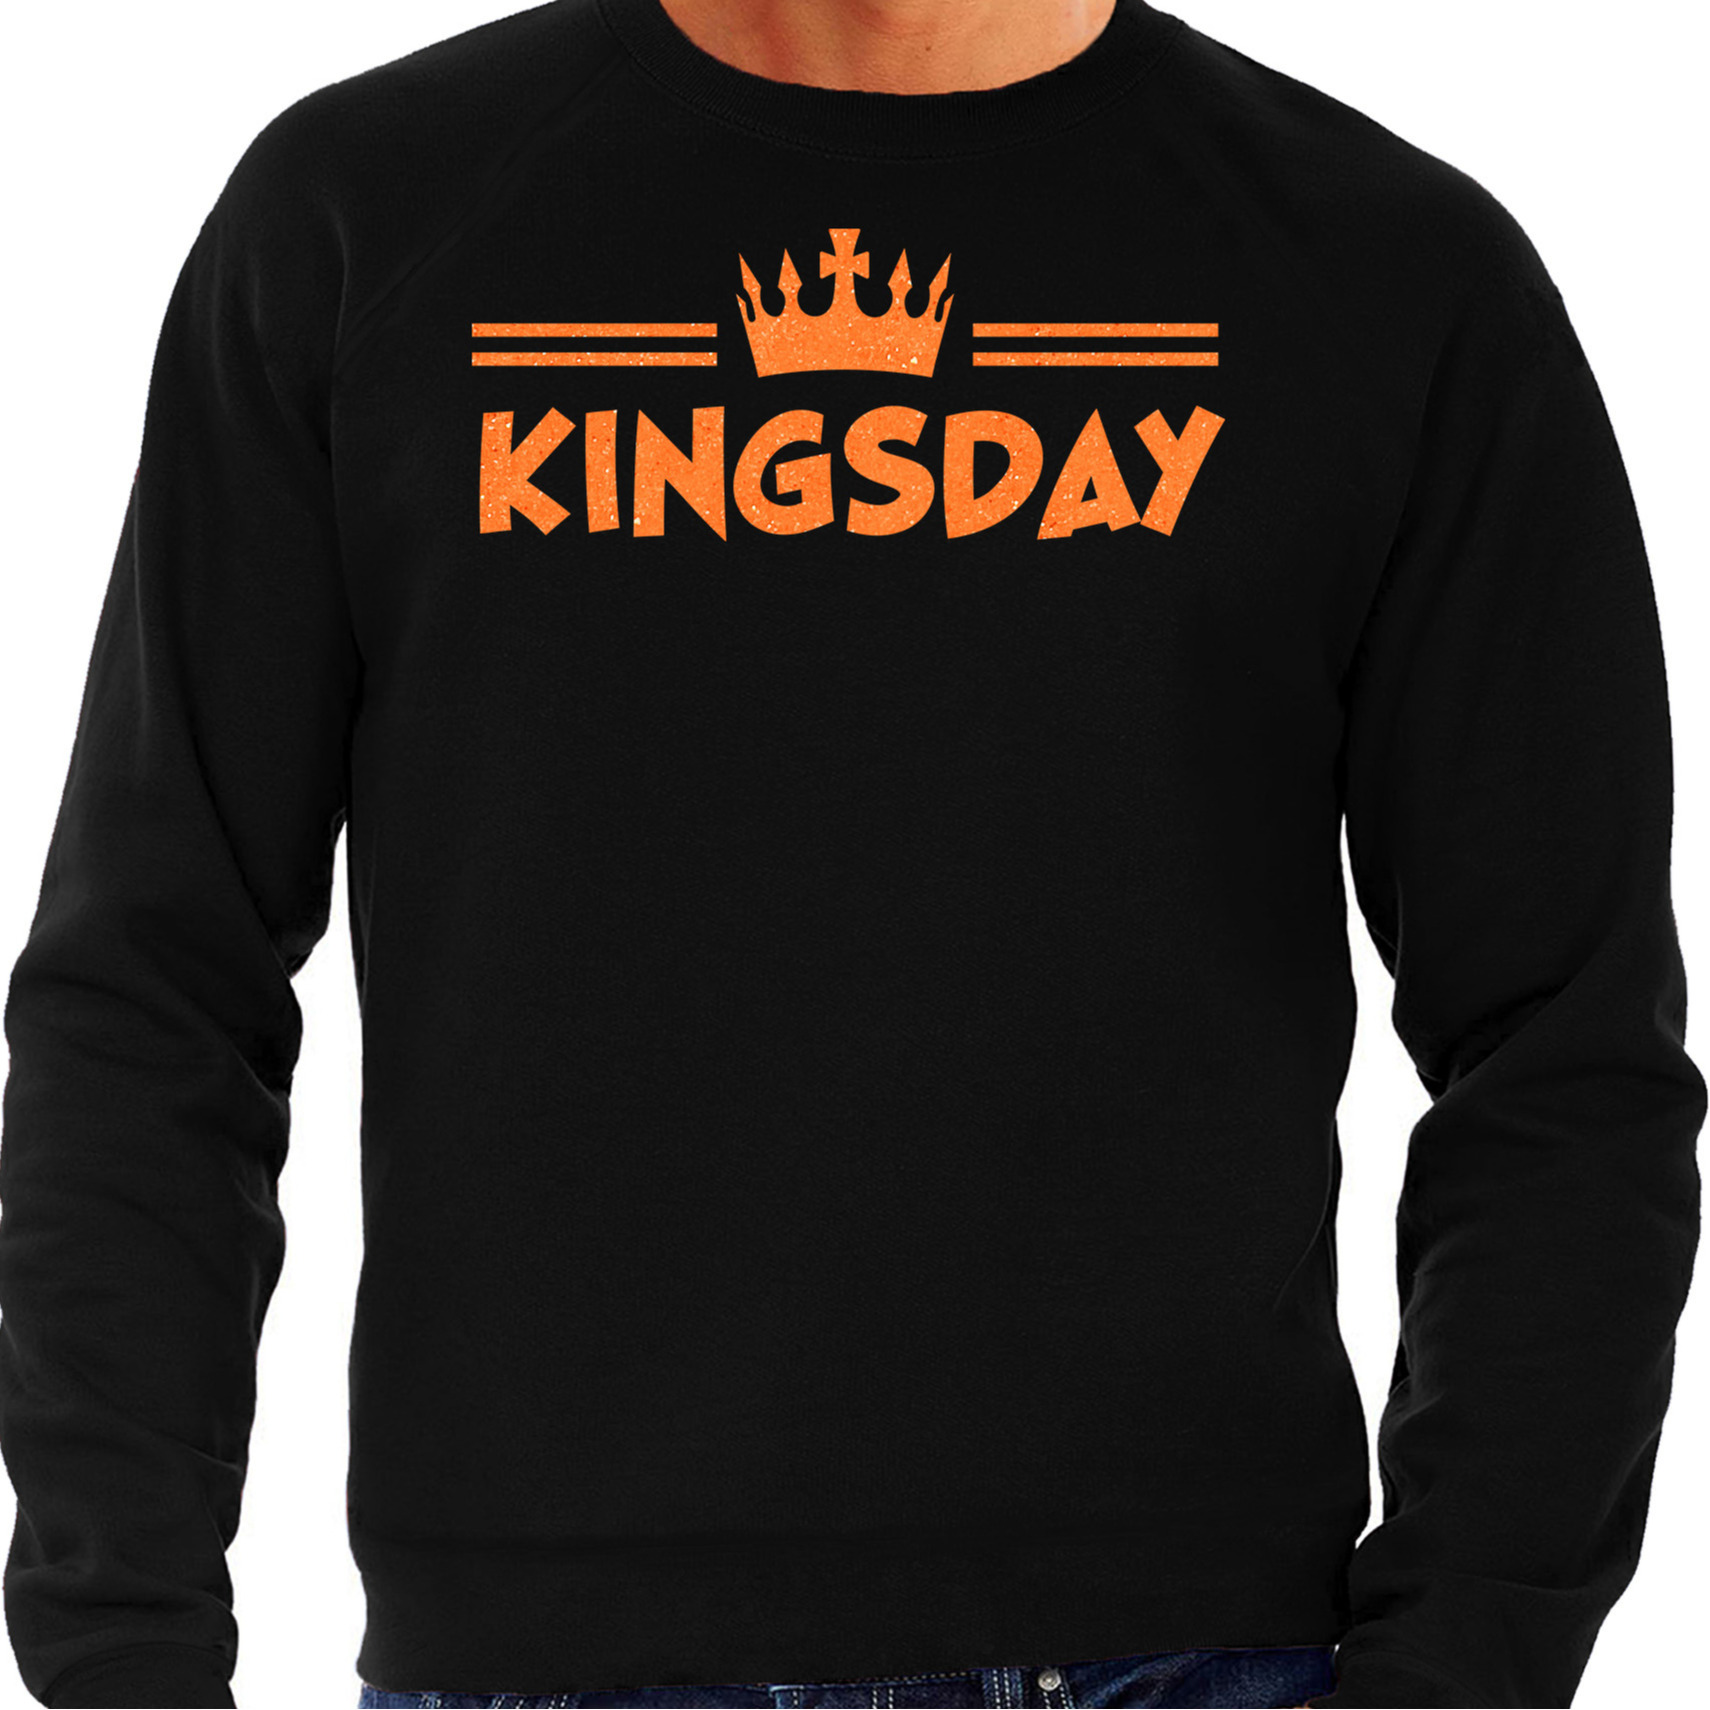 Koningsdag sweater voor heren kingsday zwart met glitters oranje feestkleding